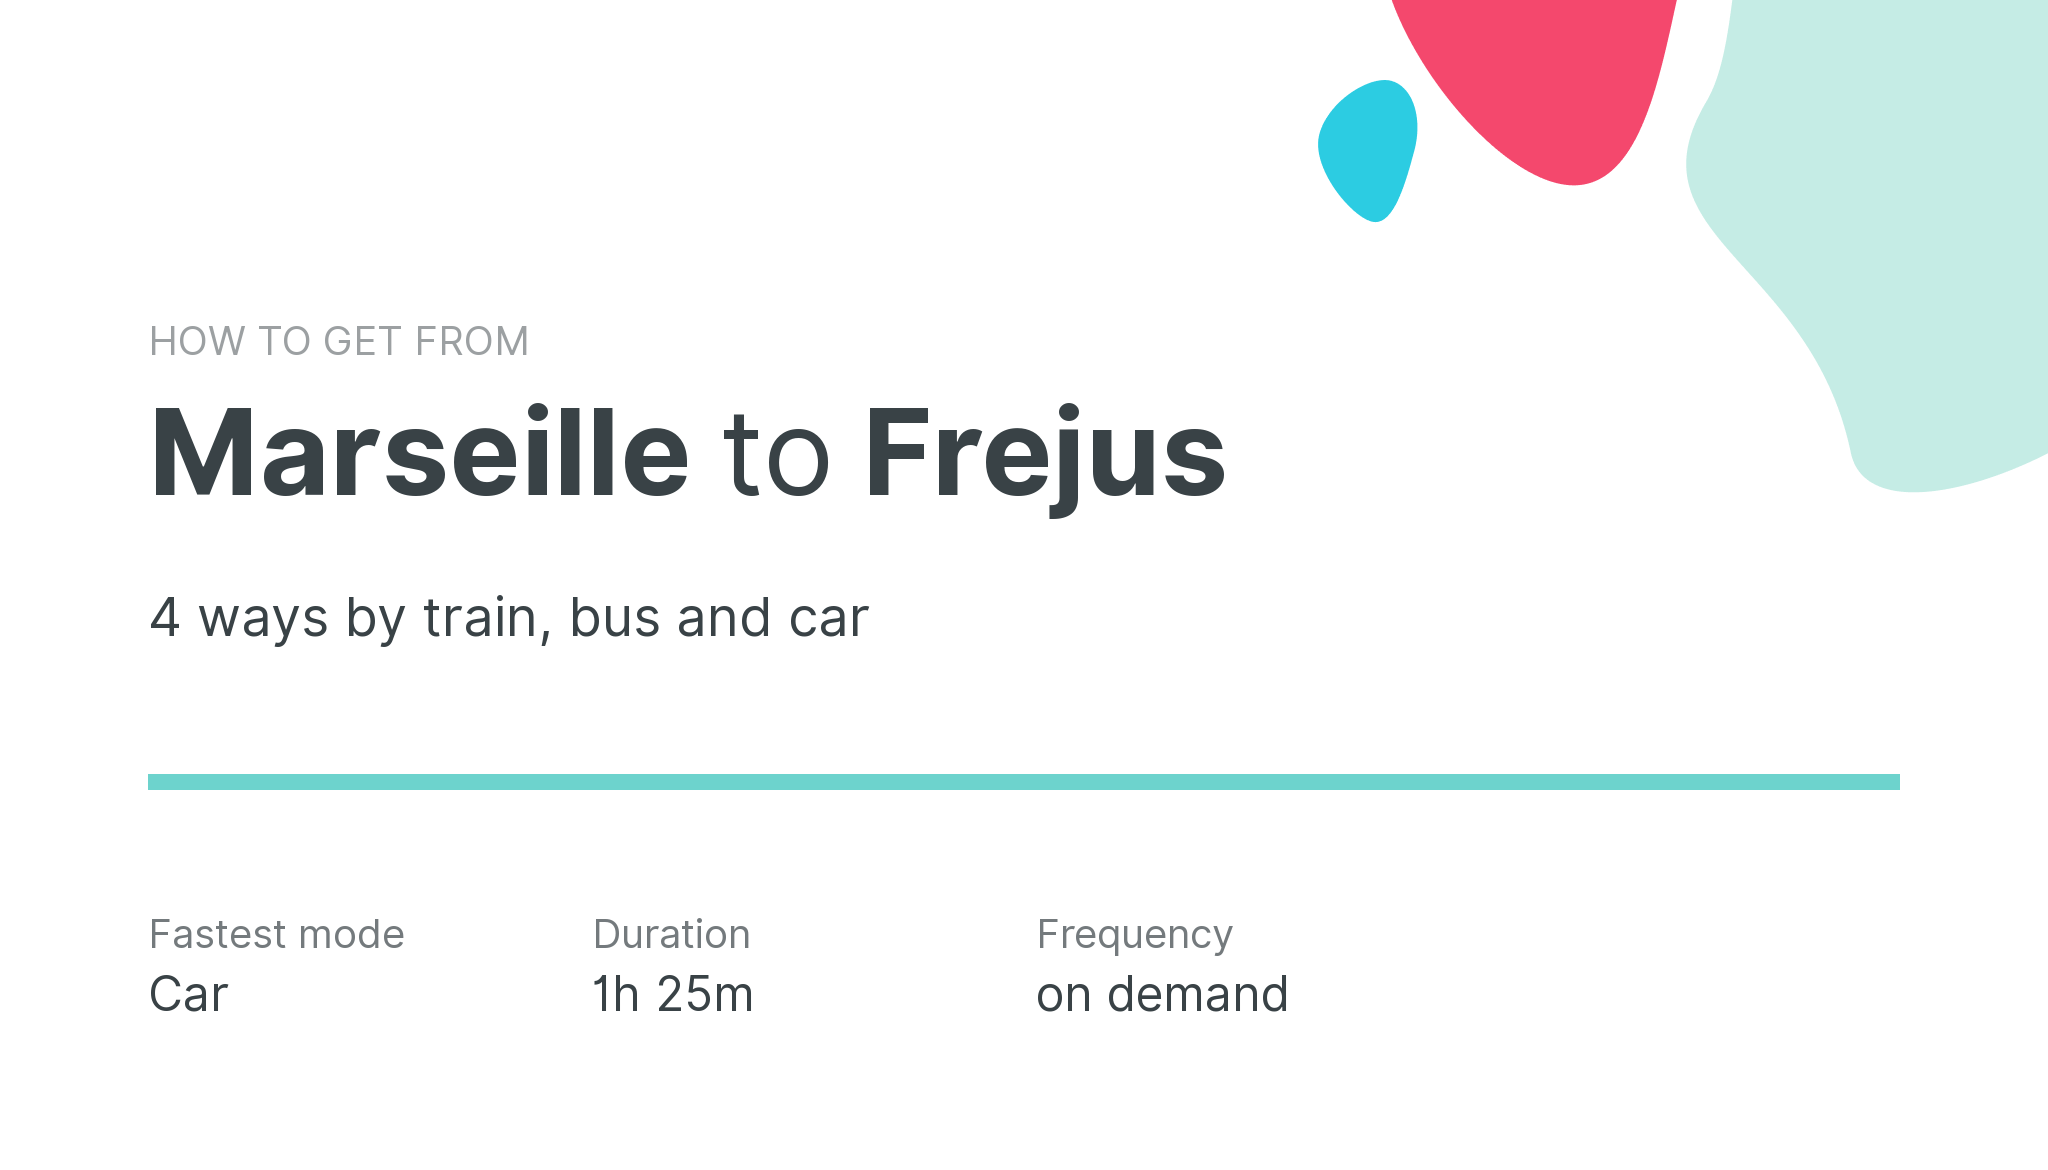 How do I get from Marseille to Frejus